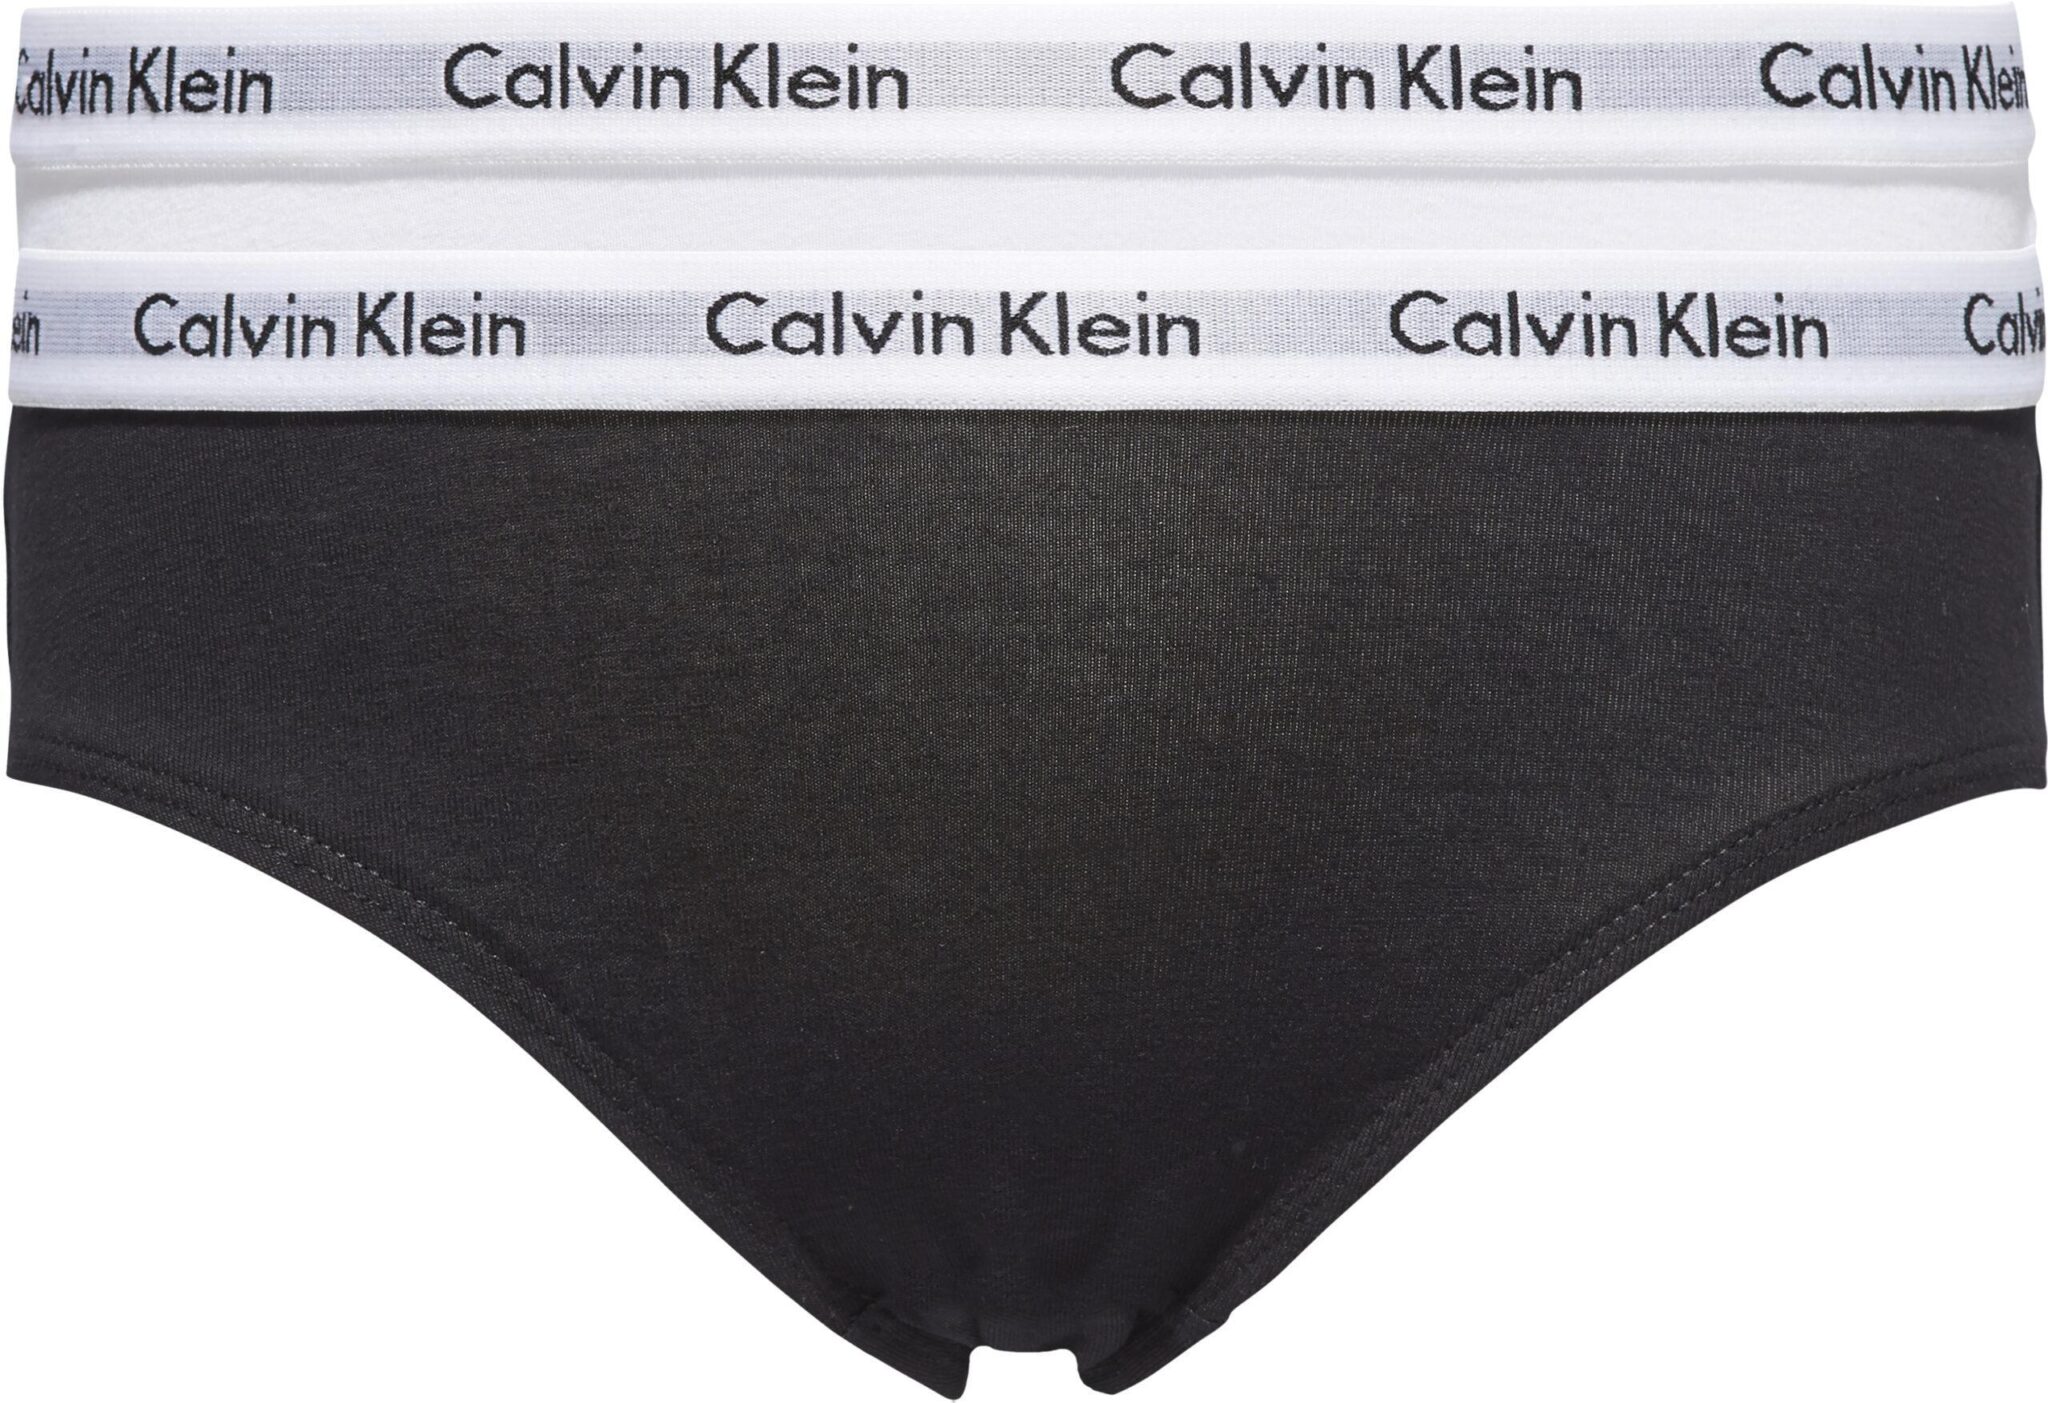 Calvin Klein Girls Black Knickers (2 Pack)